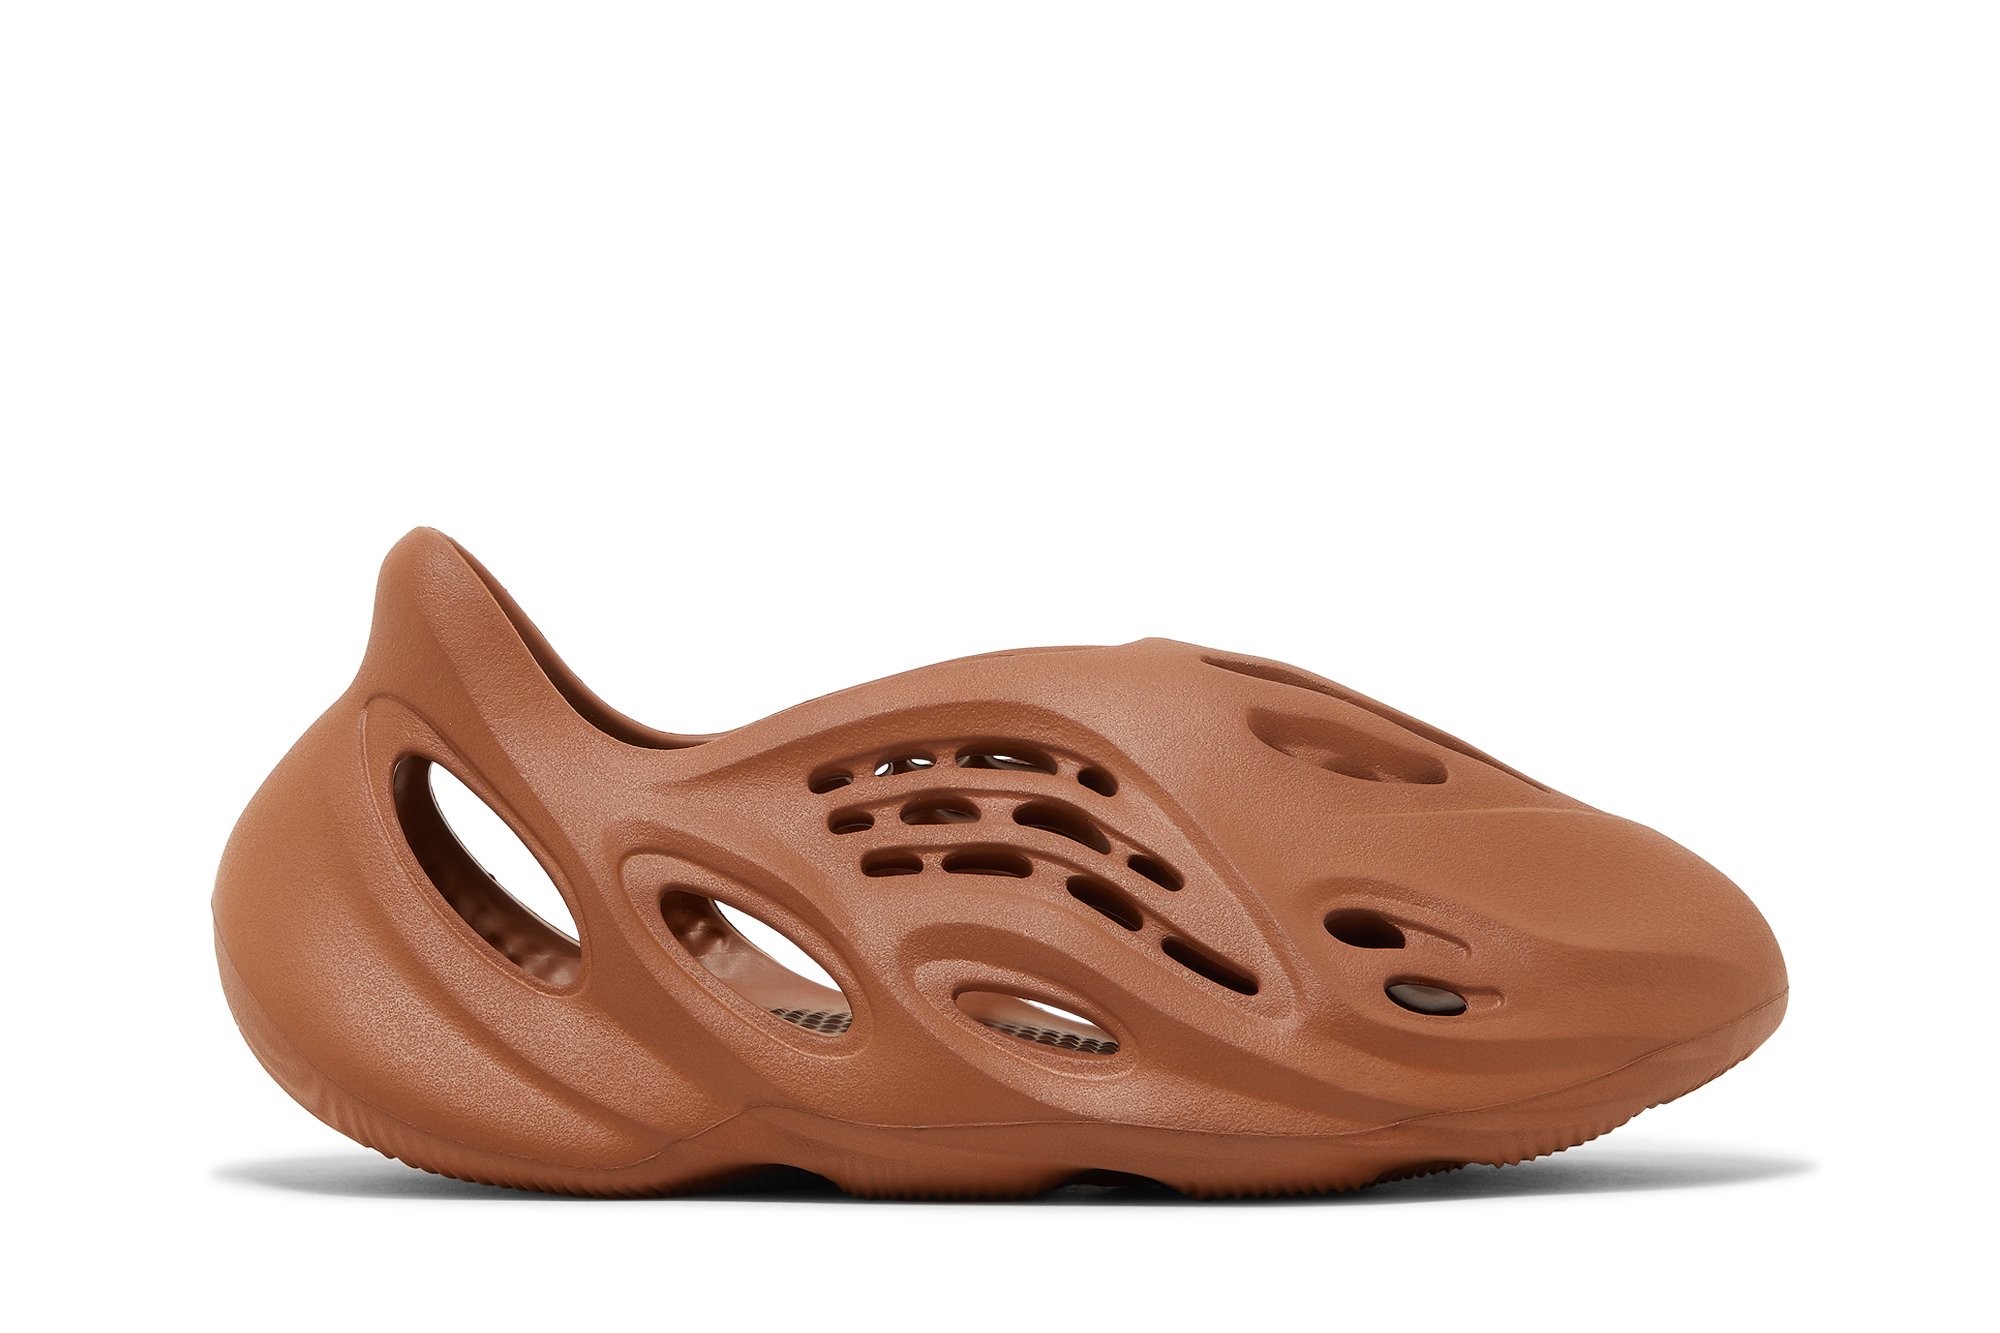 SALE新作adidas YEEZY Foam Runner Clay Taupe 28.5 靴